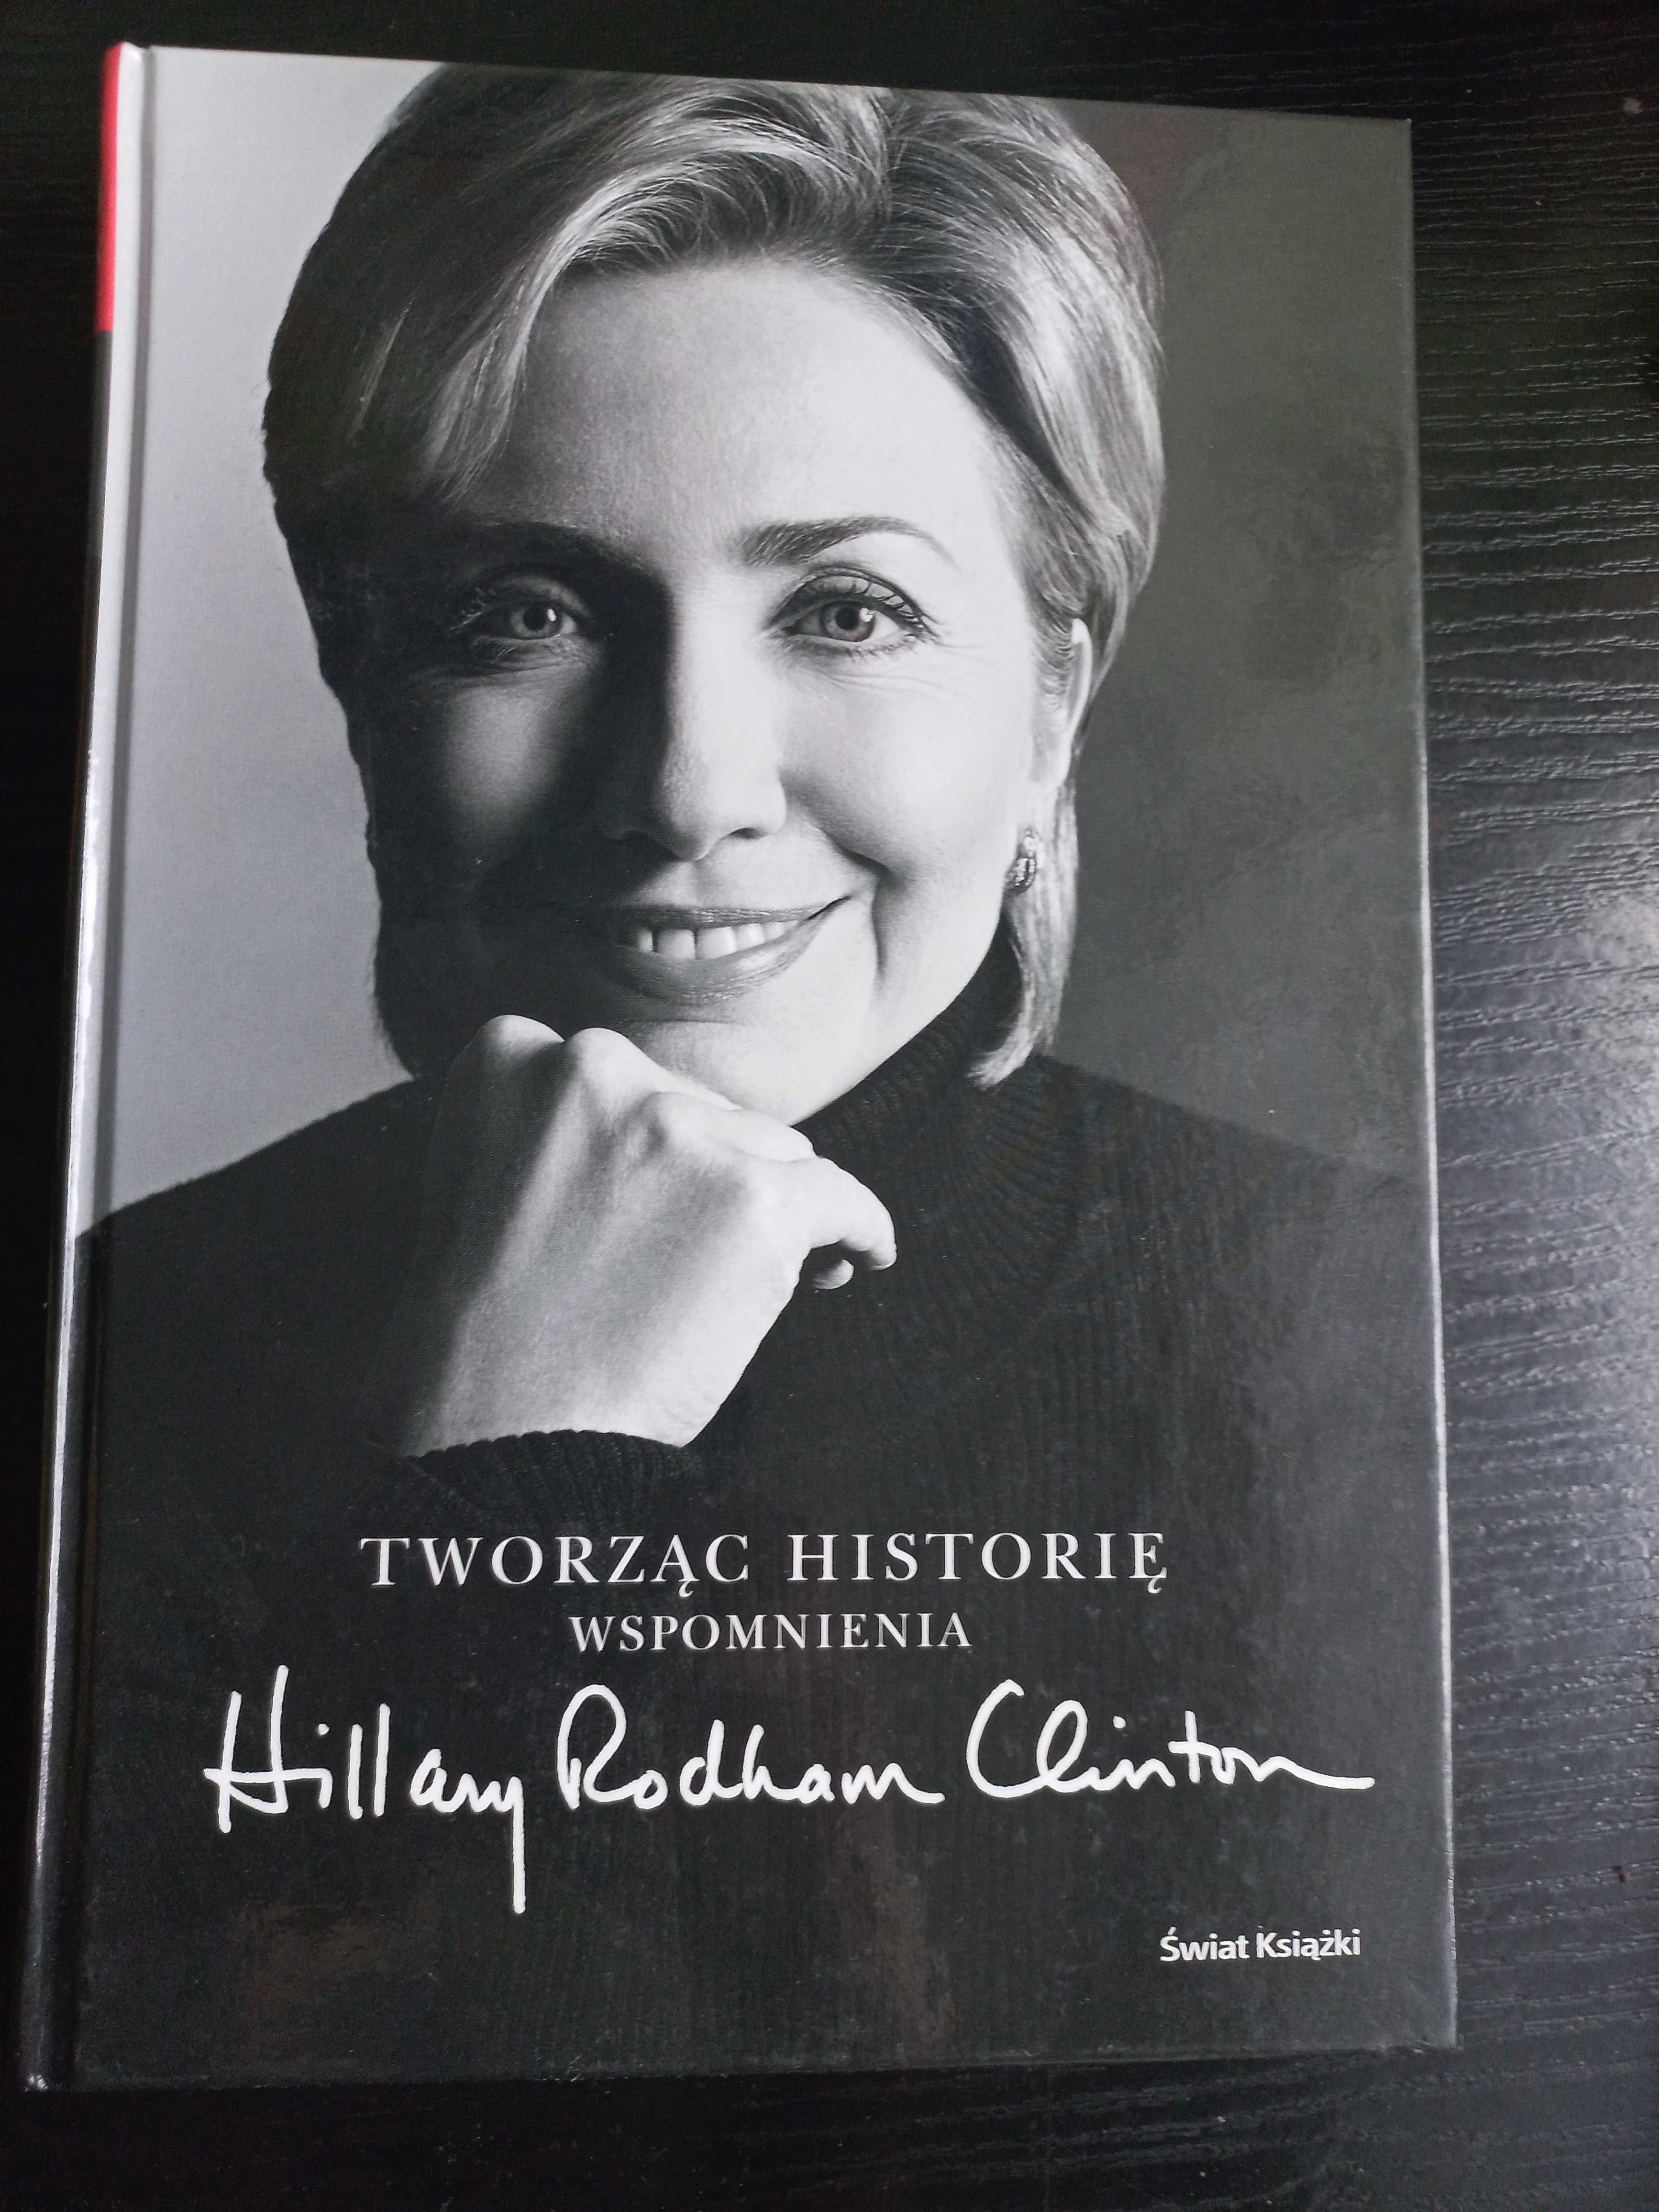 Hillary clinton tworzac historie